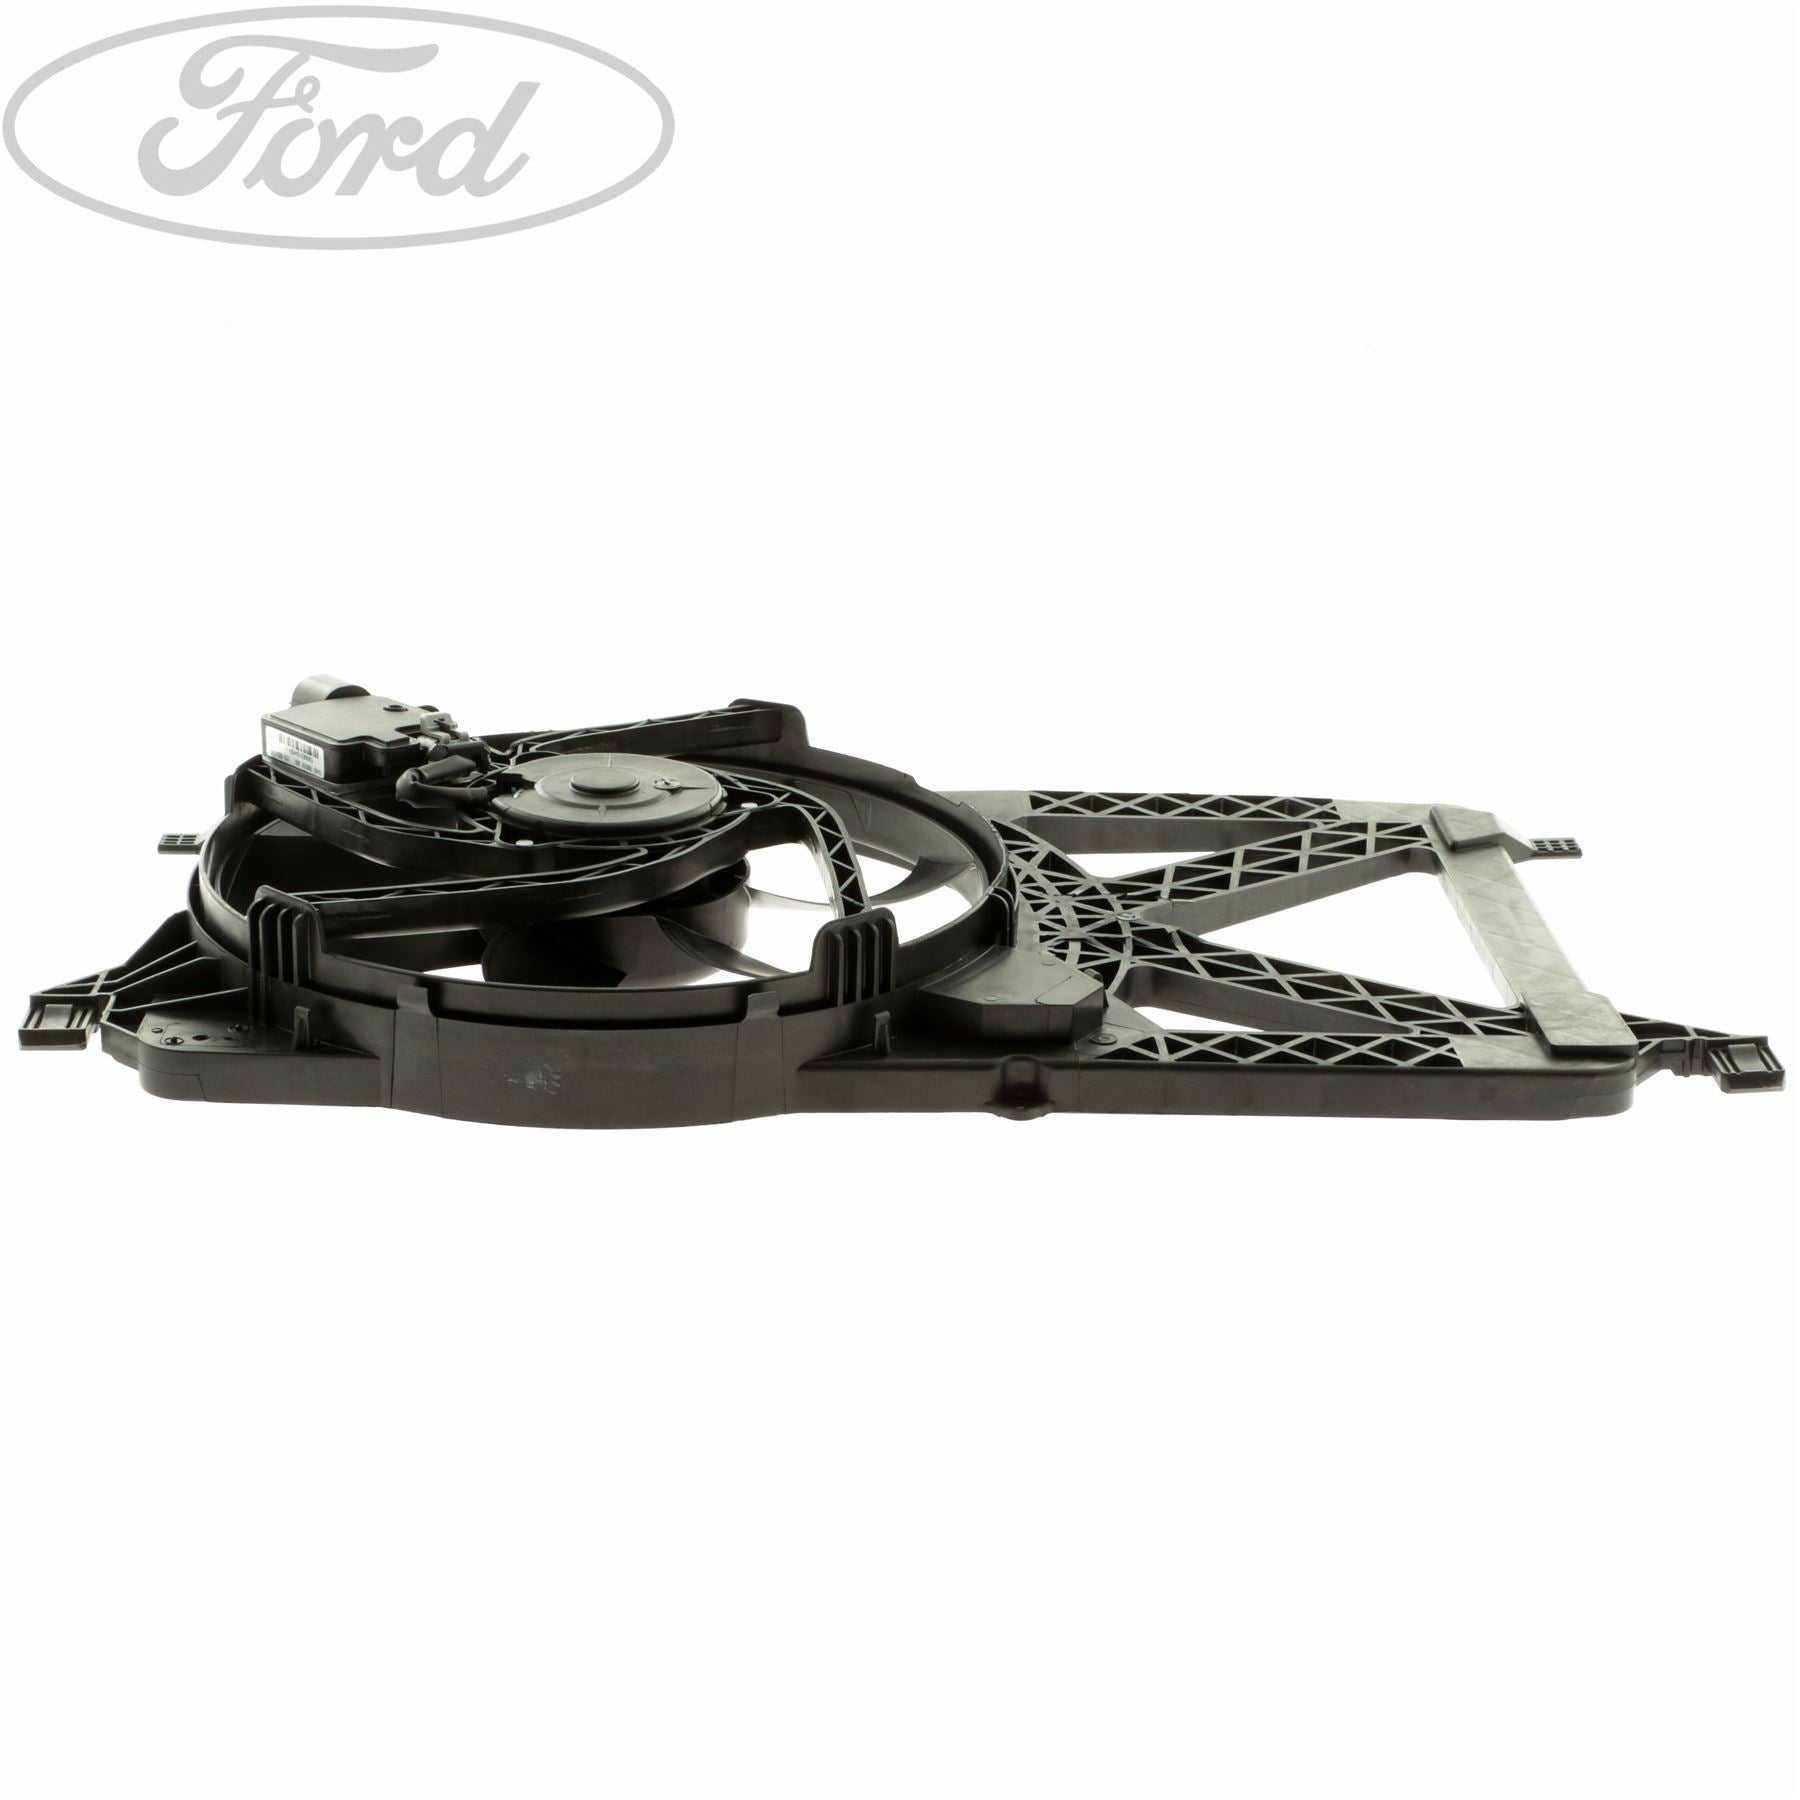 Ford, TRANSIT 2.2 2.4 TDCI ENGINE COOLING FAN & MOTOR